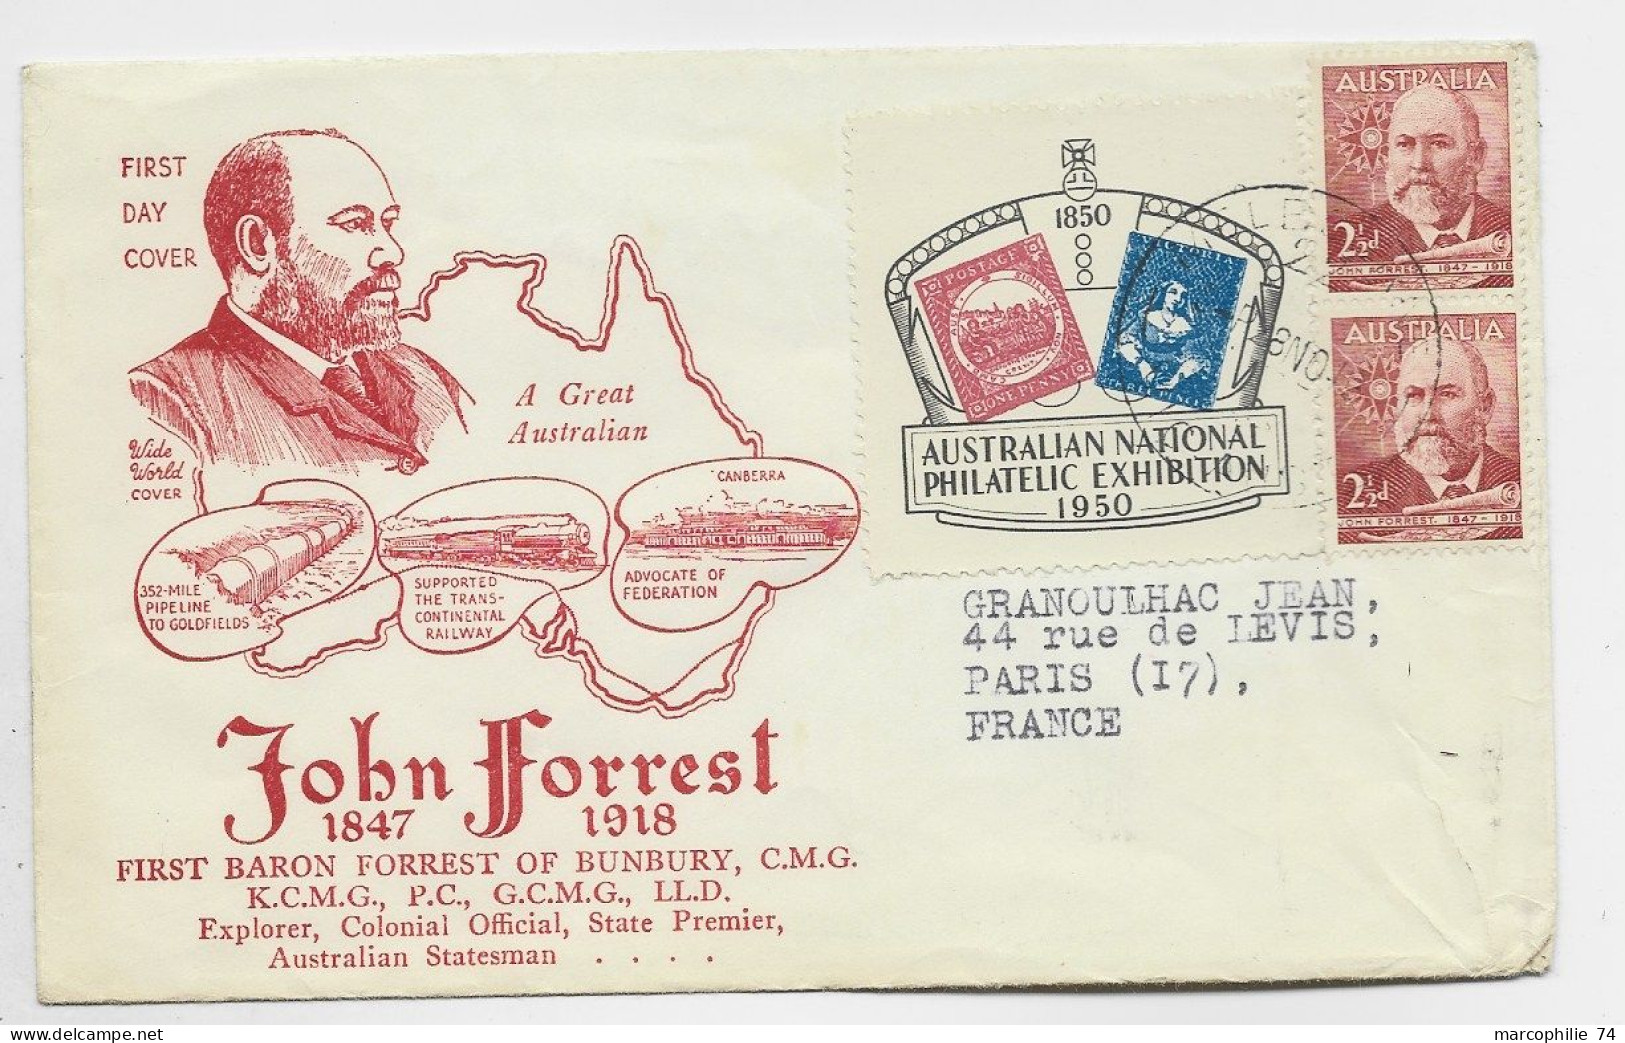 AUSTRALIA 2 1/2D PAIRE LETTRE COVER JOHN FORREST FIRST BARRON 1847 1918 FDC  MELBOURNE 1950 TO FRANCE - Lettres & Documents